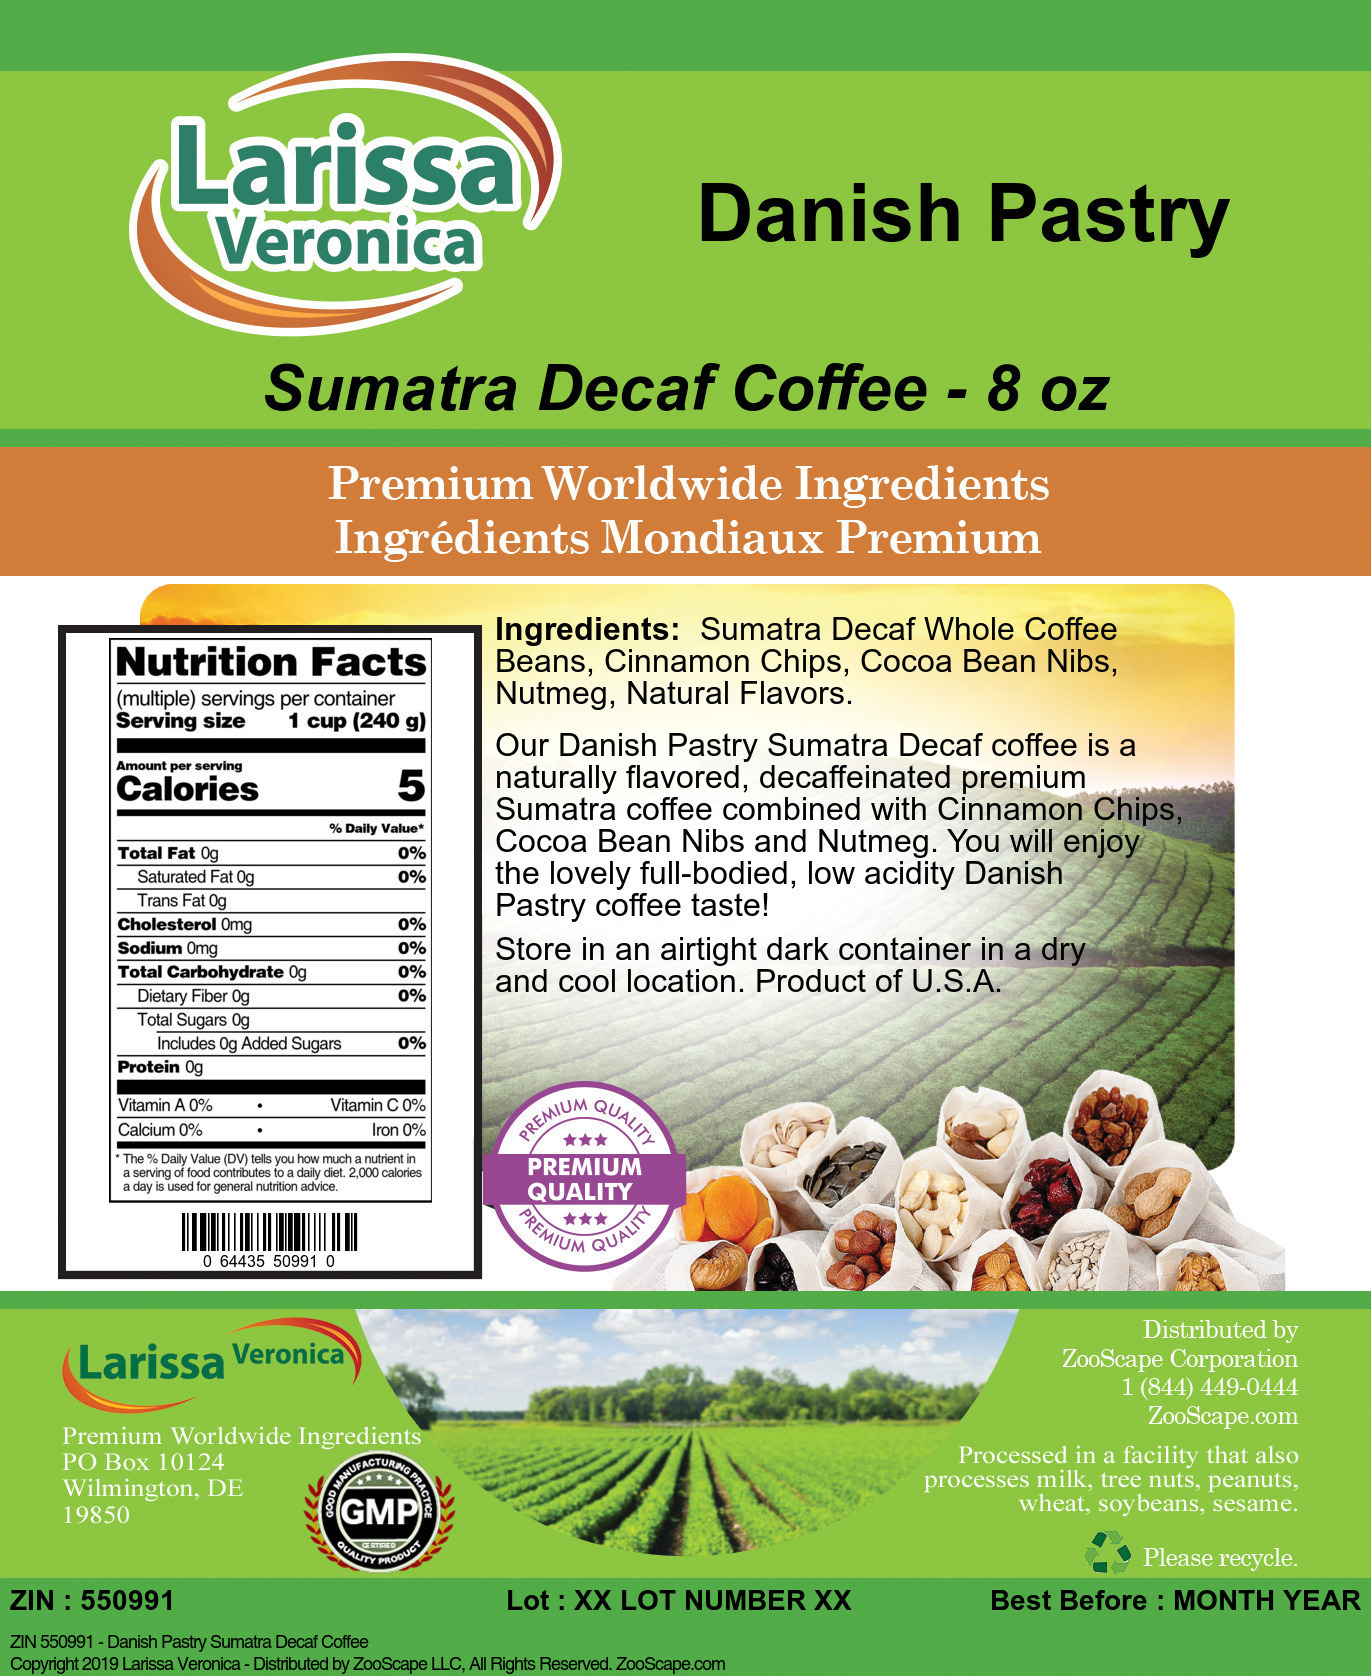 Danish Pastry Sumatra Decaf Coffee - Label